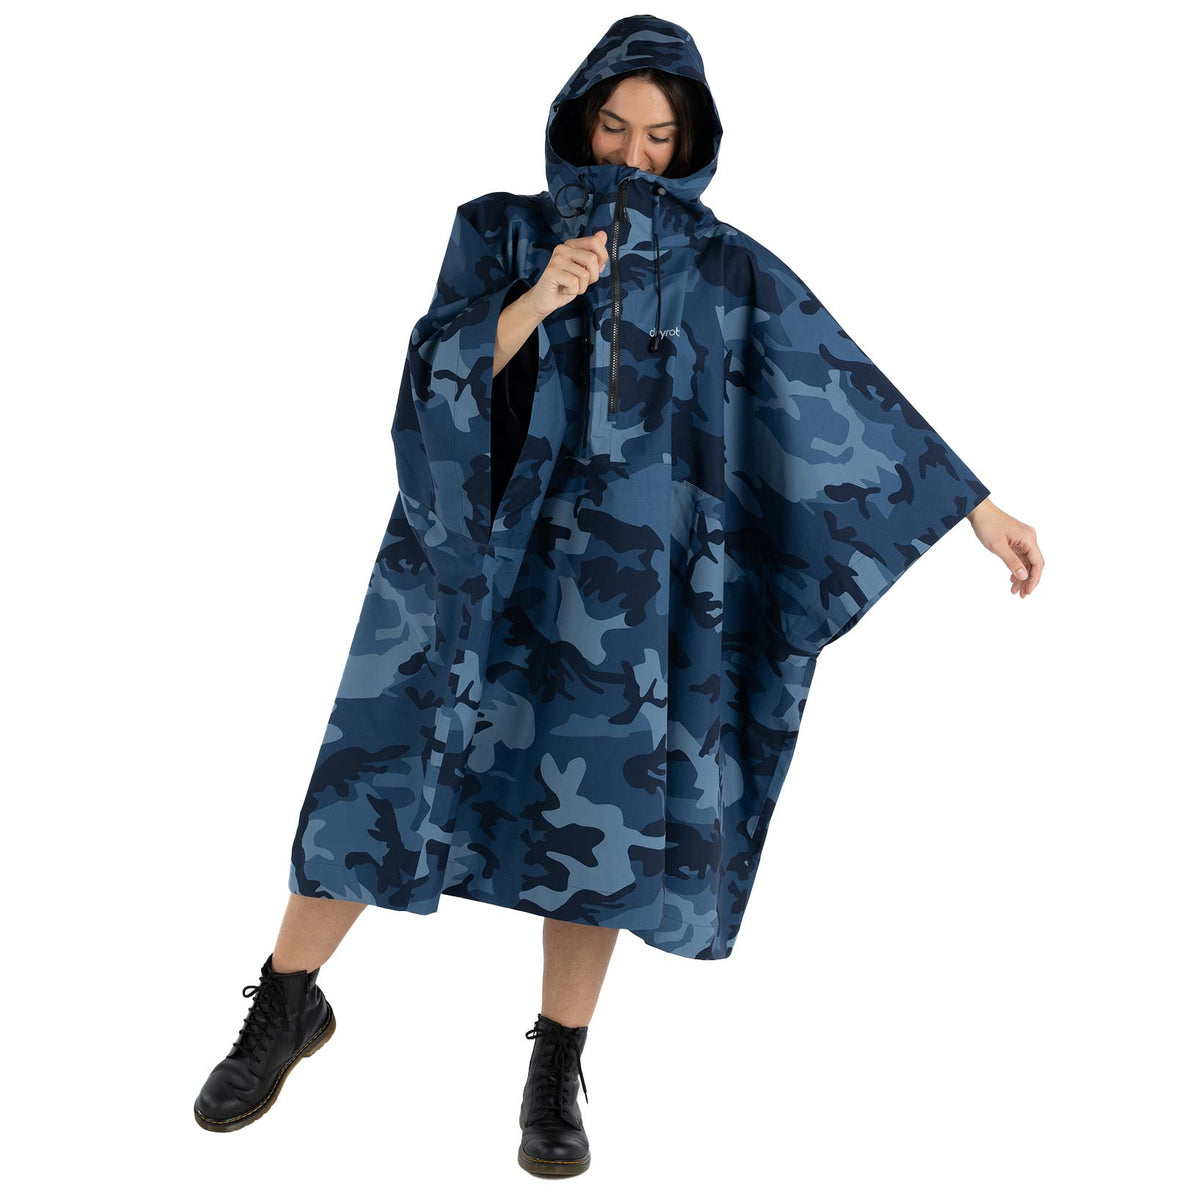 Dryrobe Waterproof Poncho - Blue Camo - Changing Robe Poncho Towel by Dryrobe One Size